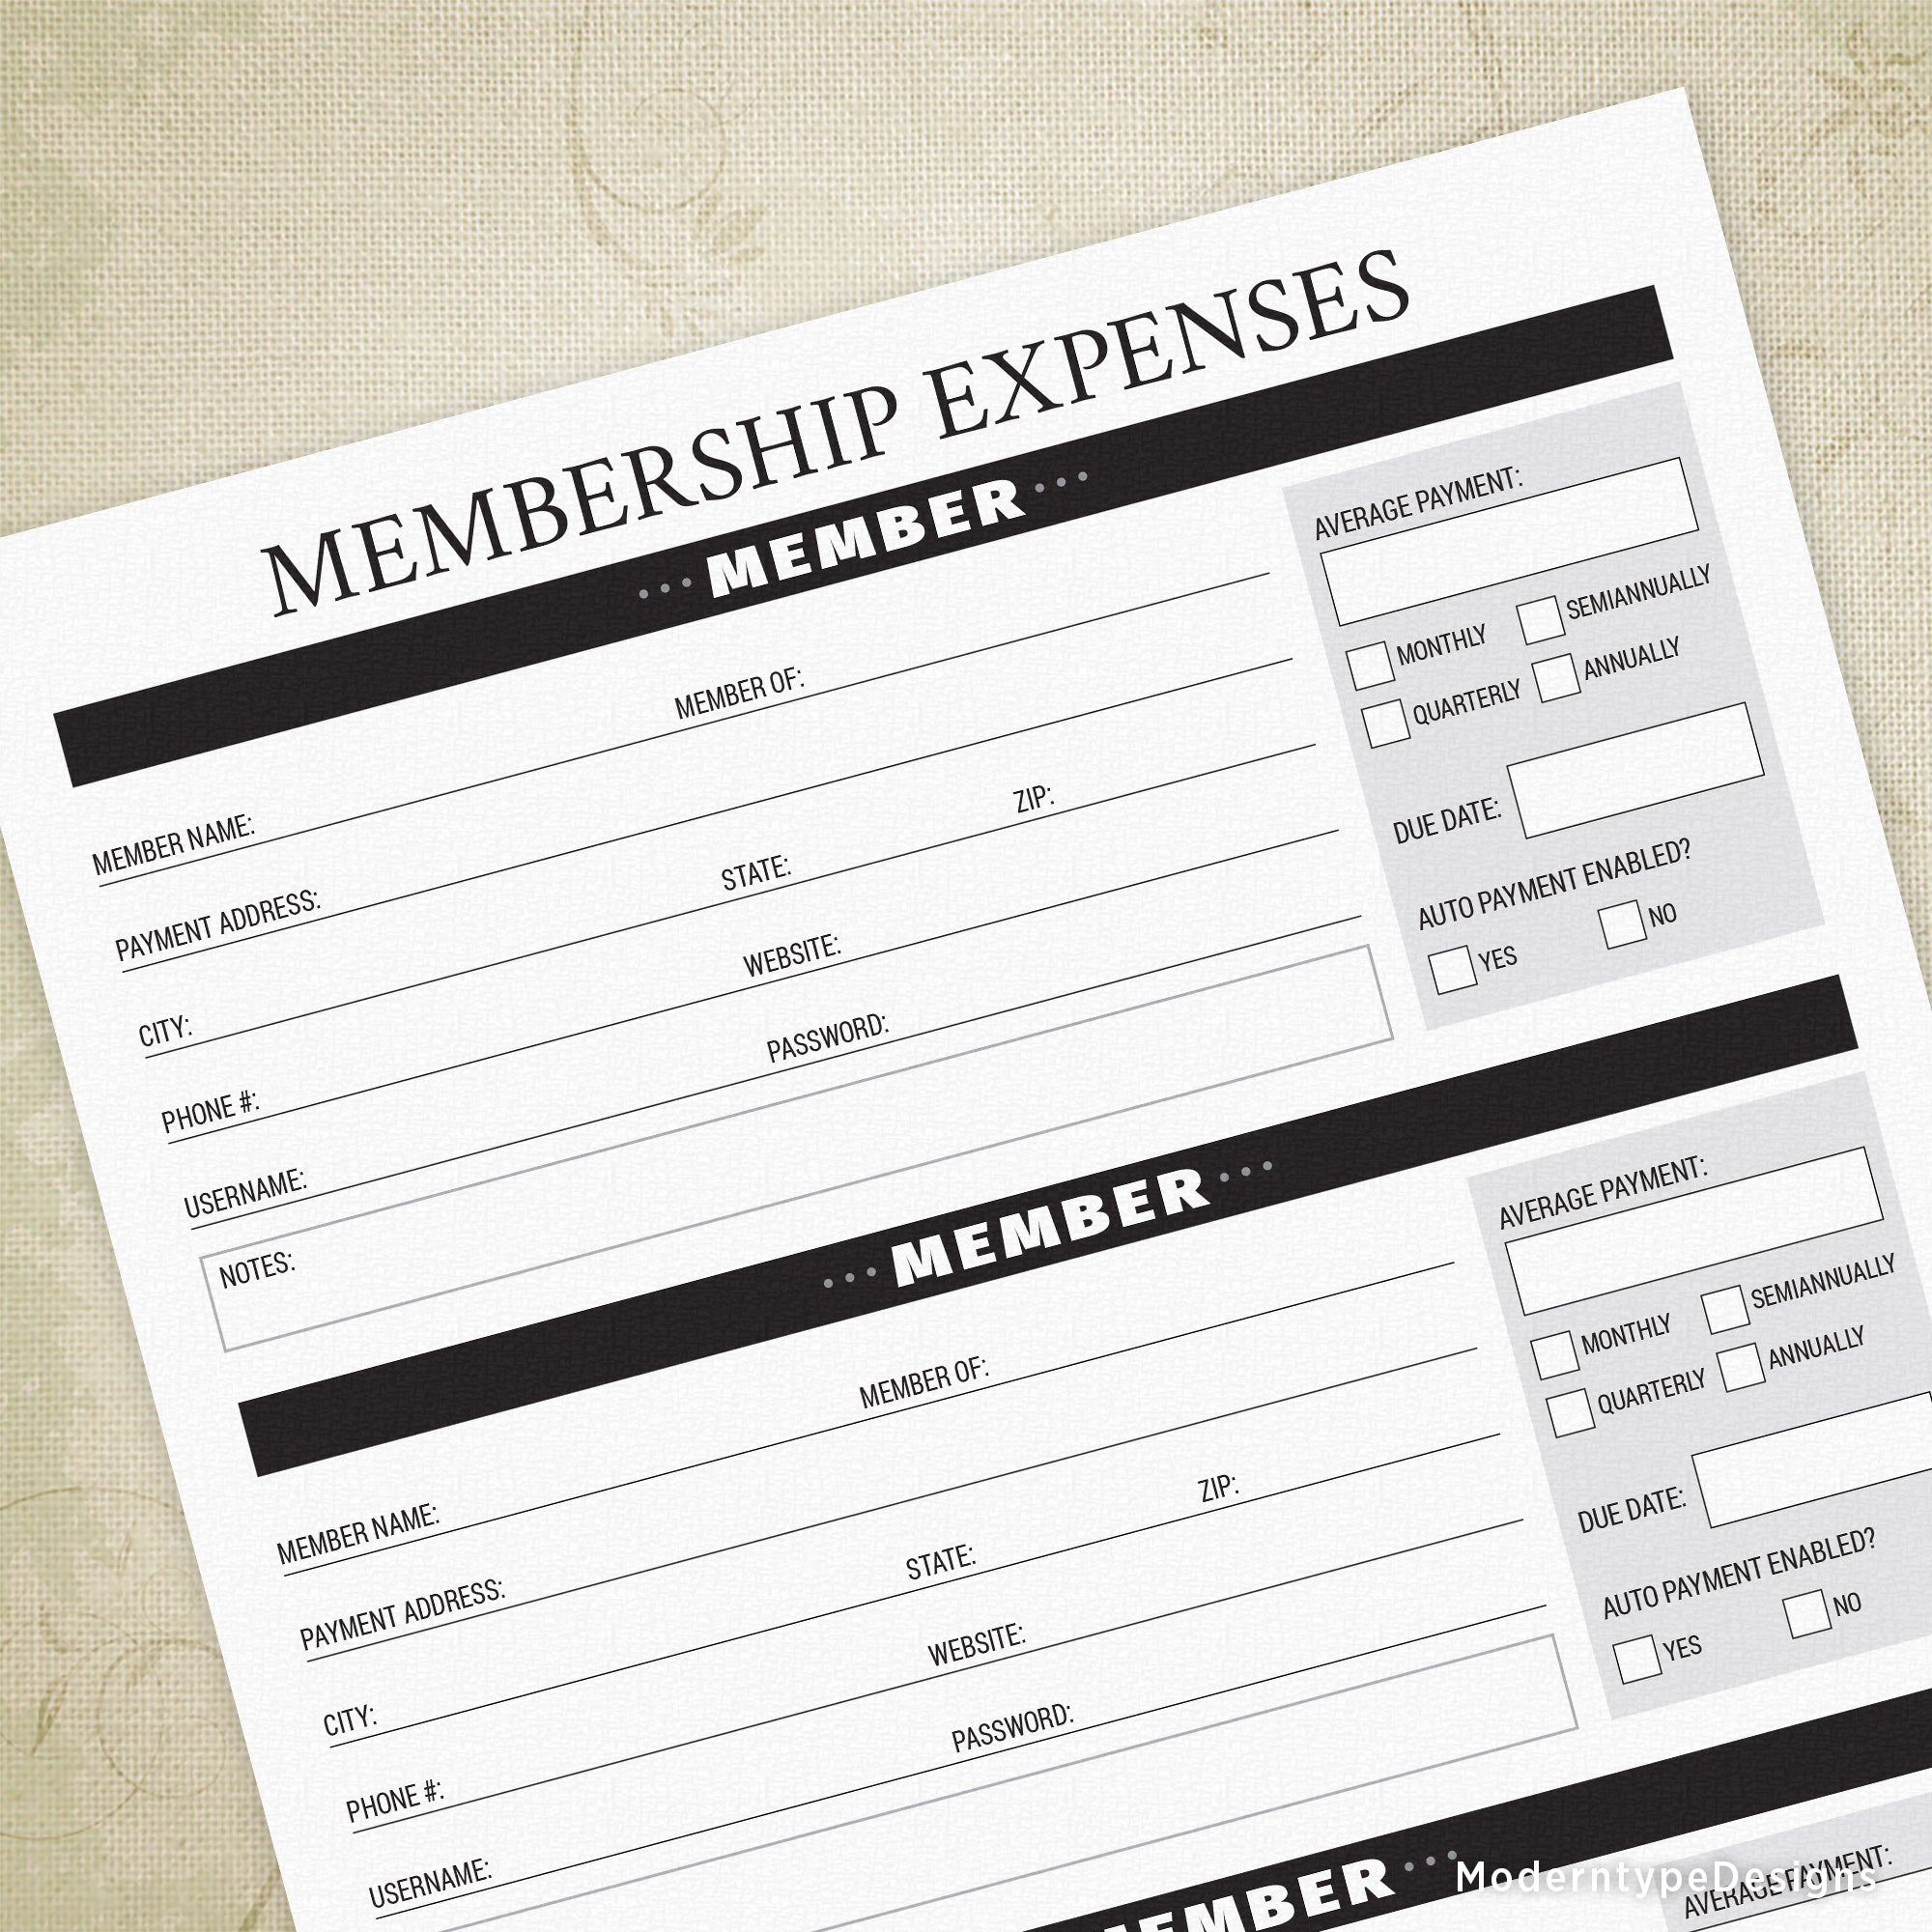 Membership Expenses Printable - End of Life